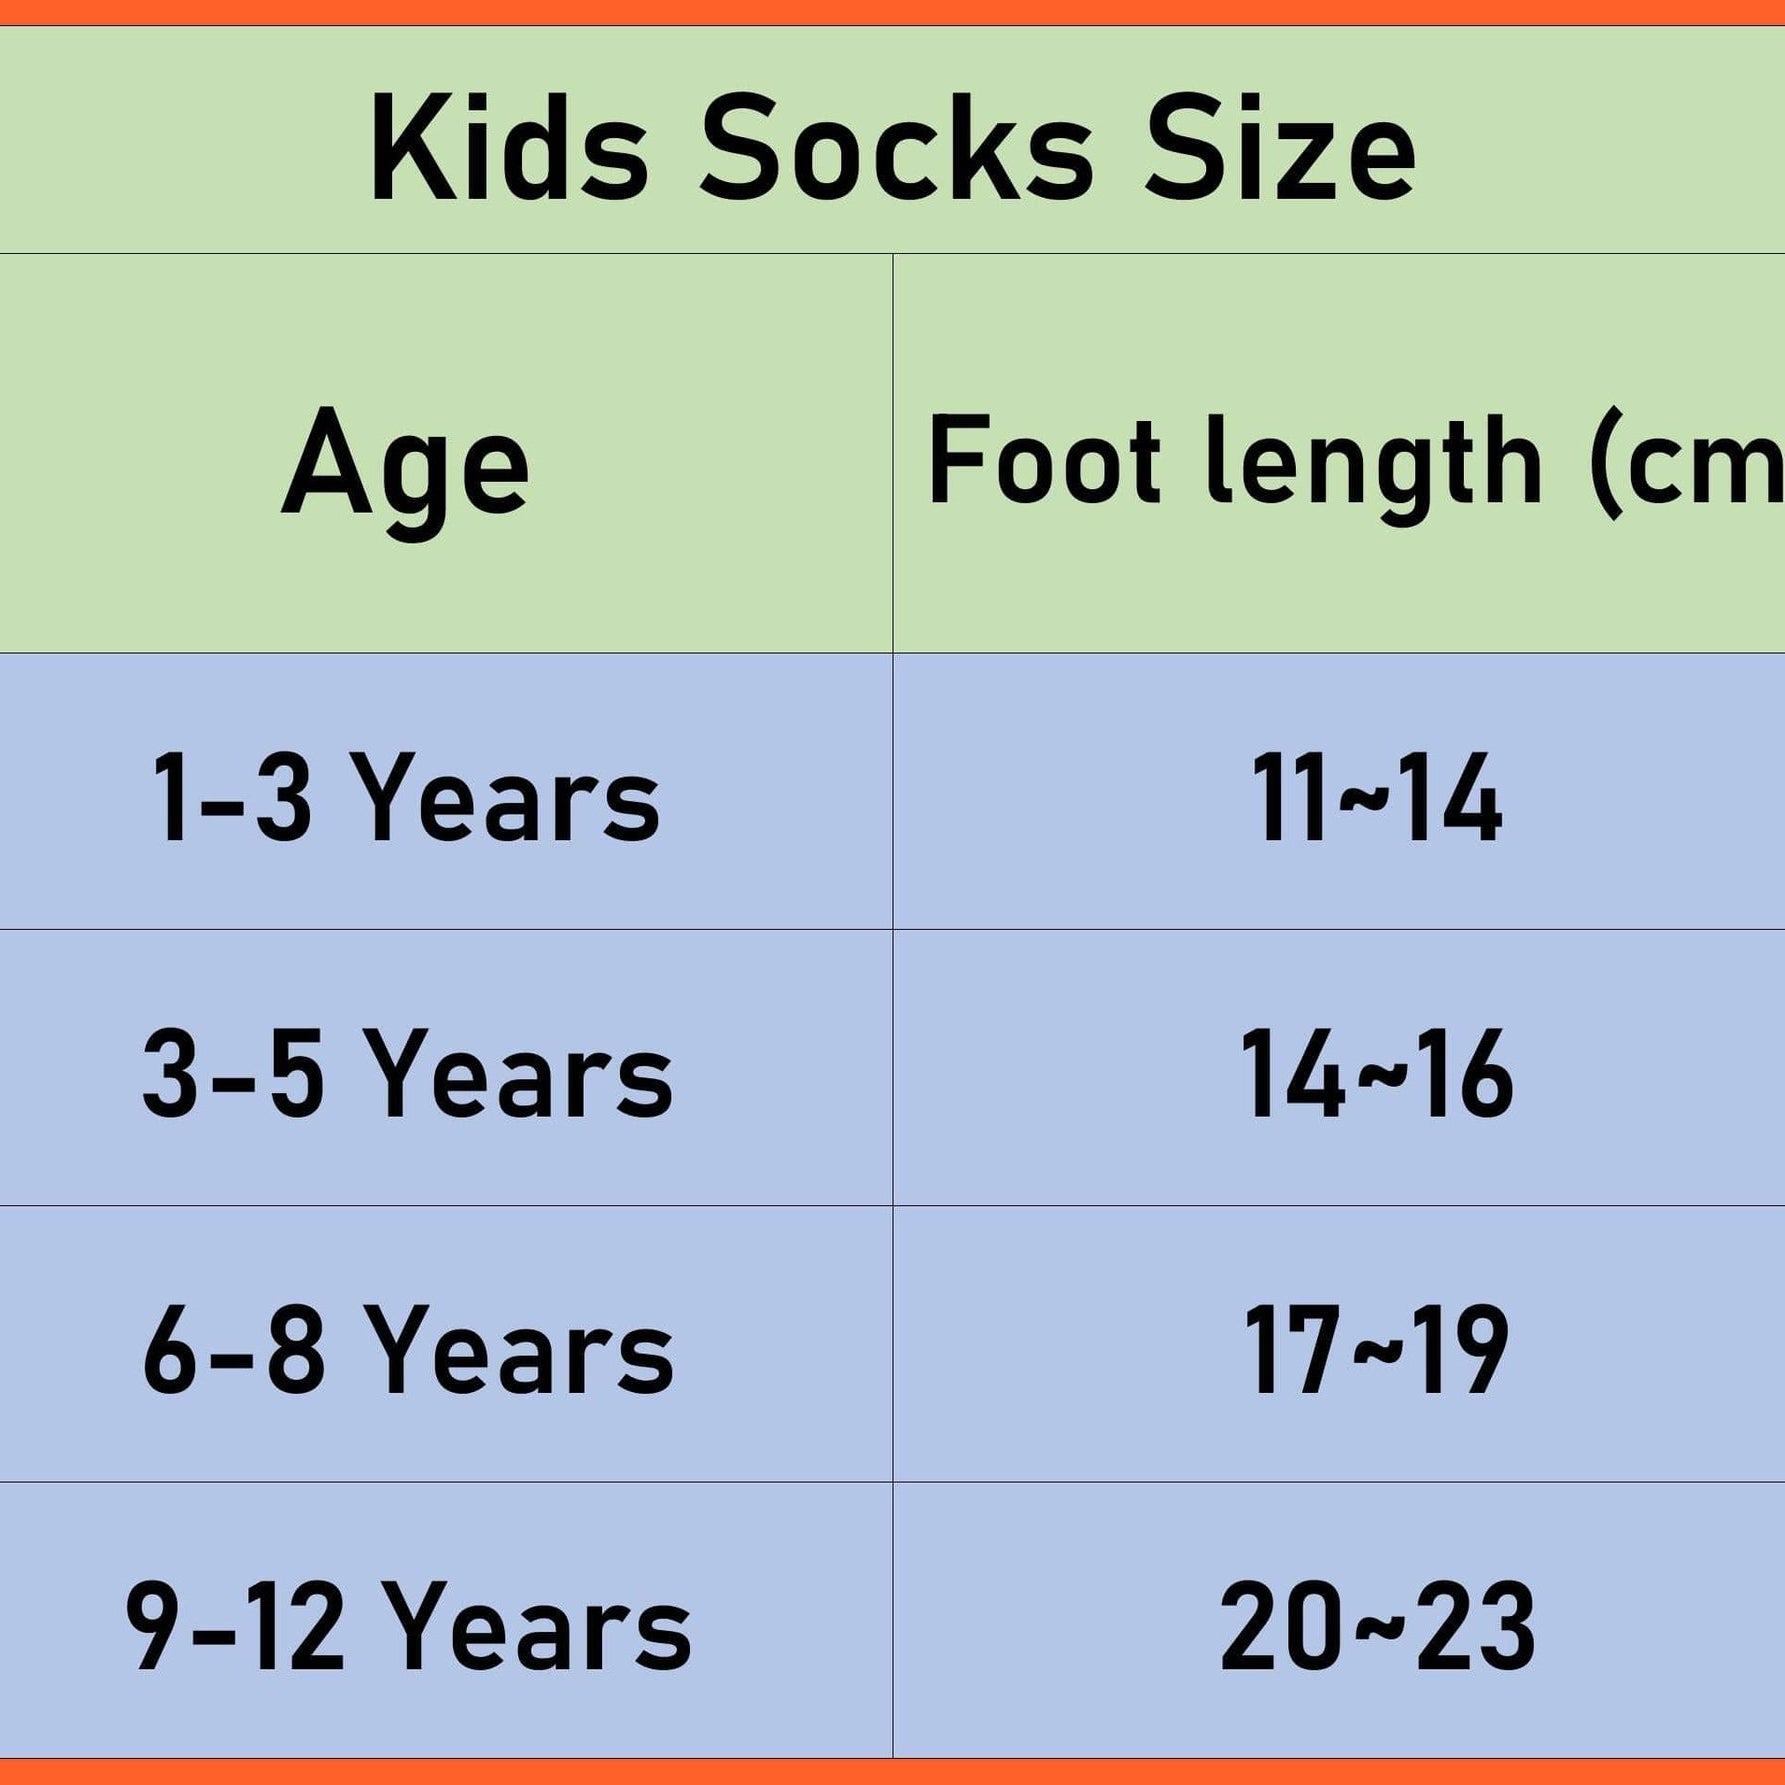 whatagift.com.au Cotton Non-slip Socks for Kids